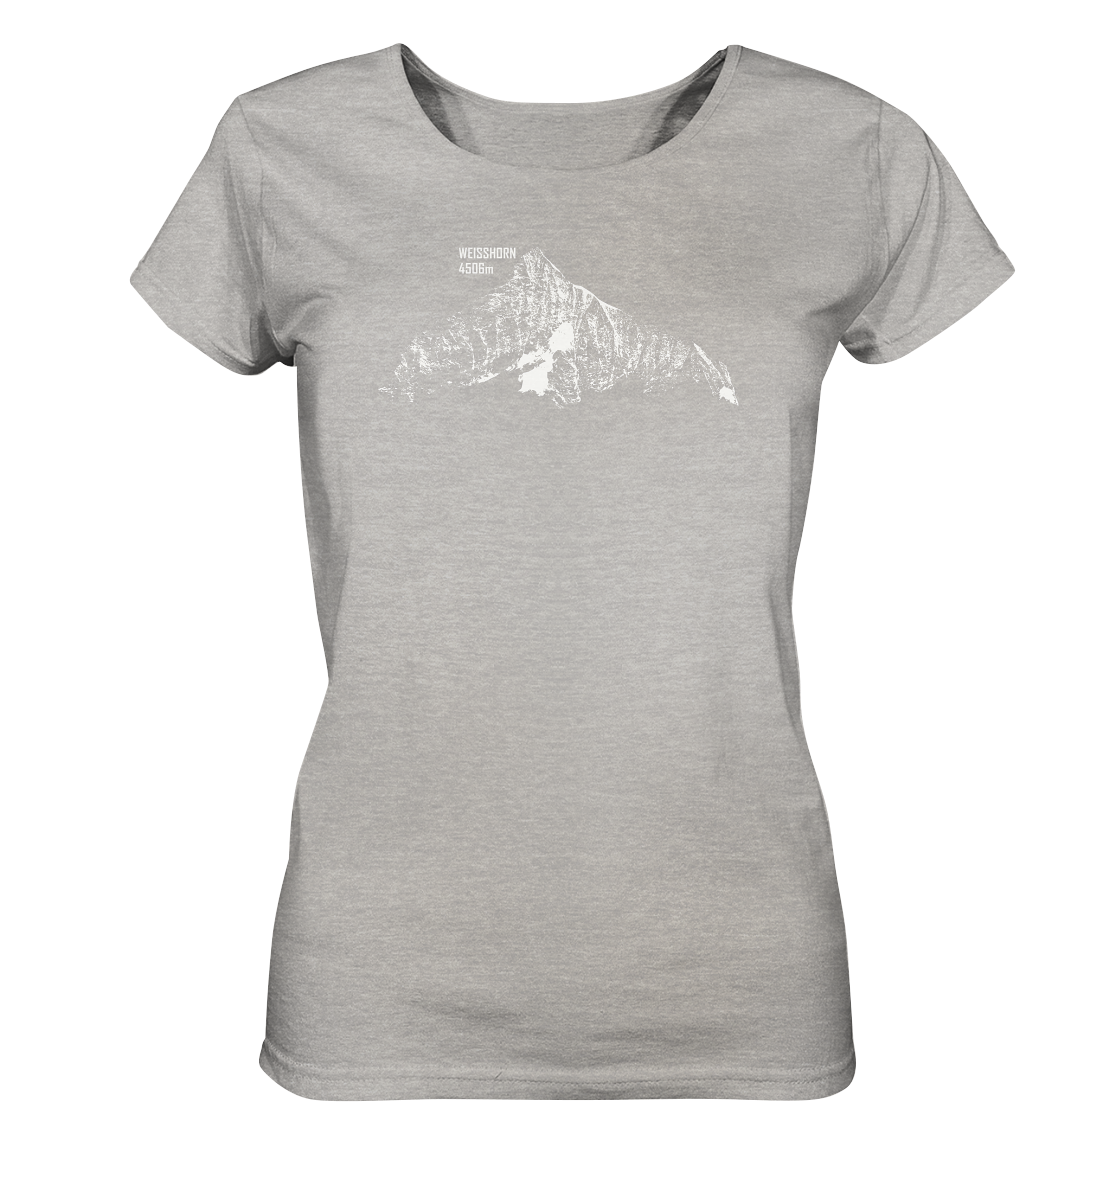 Weisshorn Klassik  - Ladies Organic Shirt (meliert)